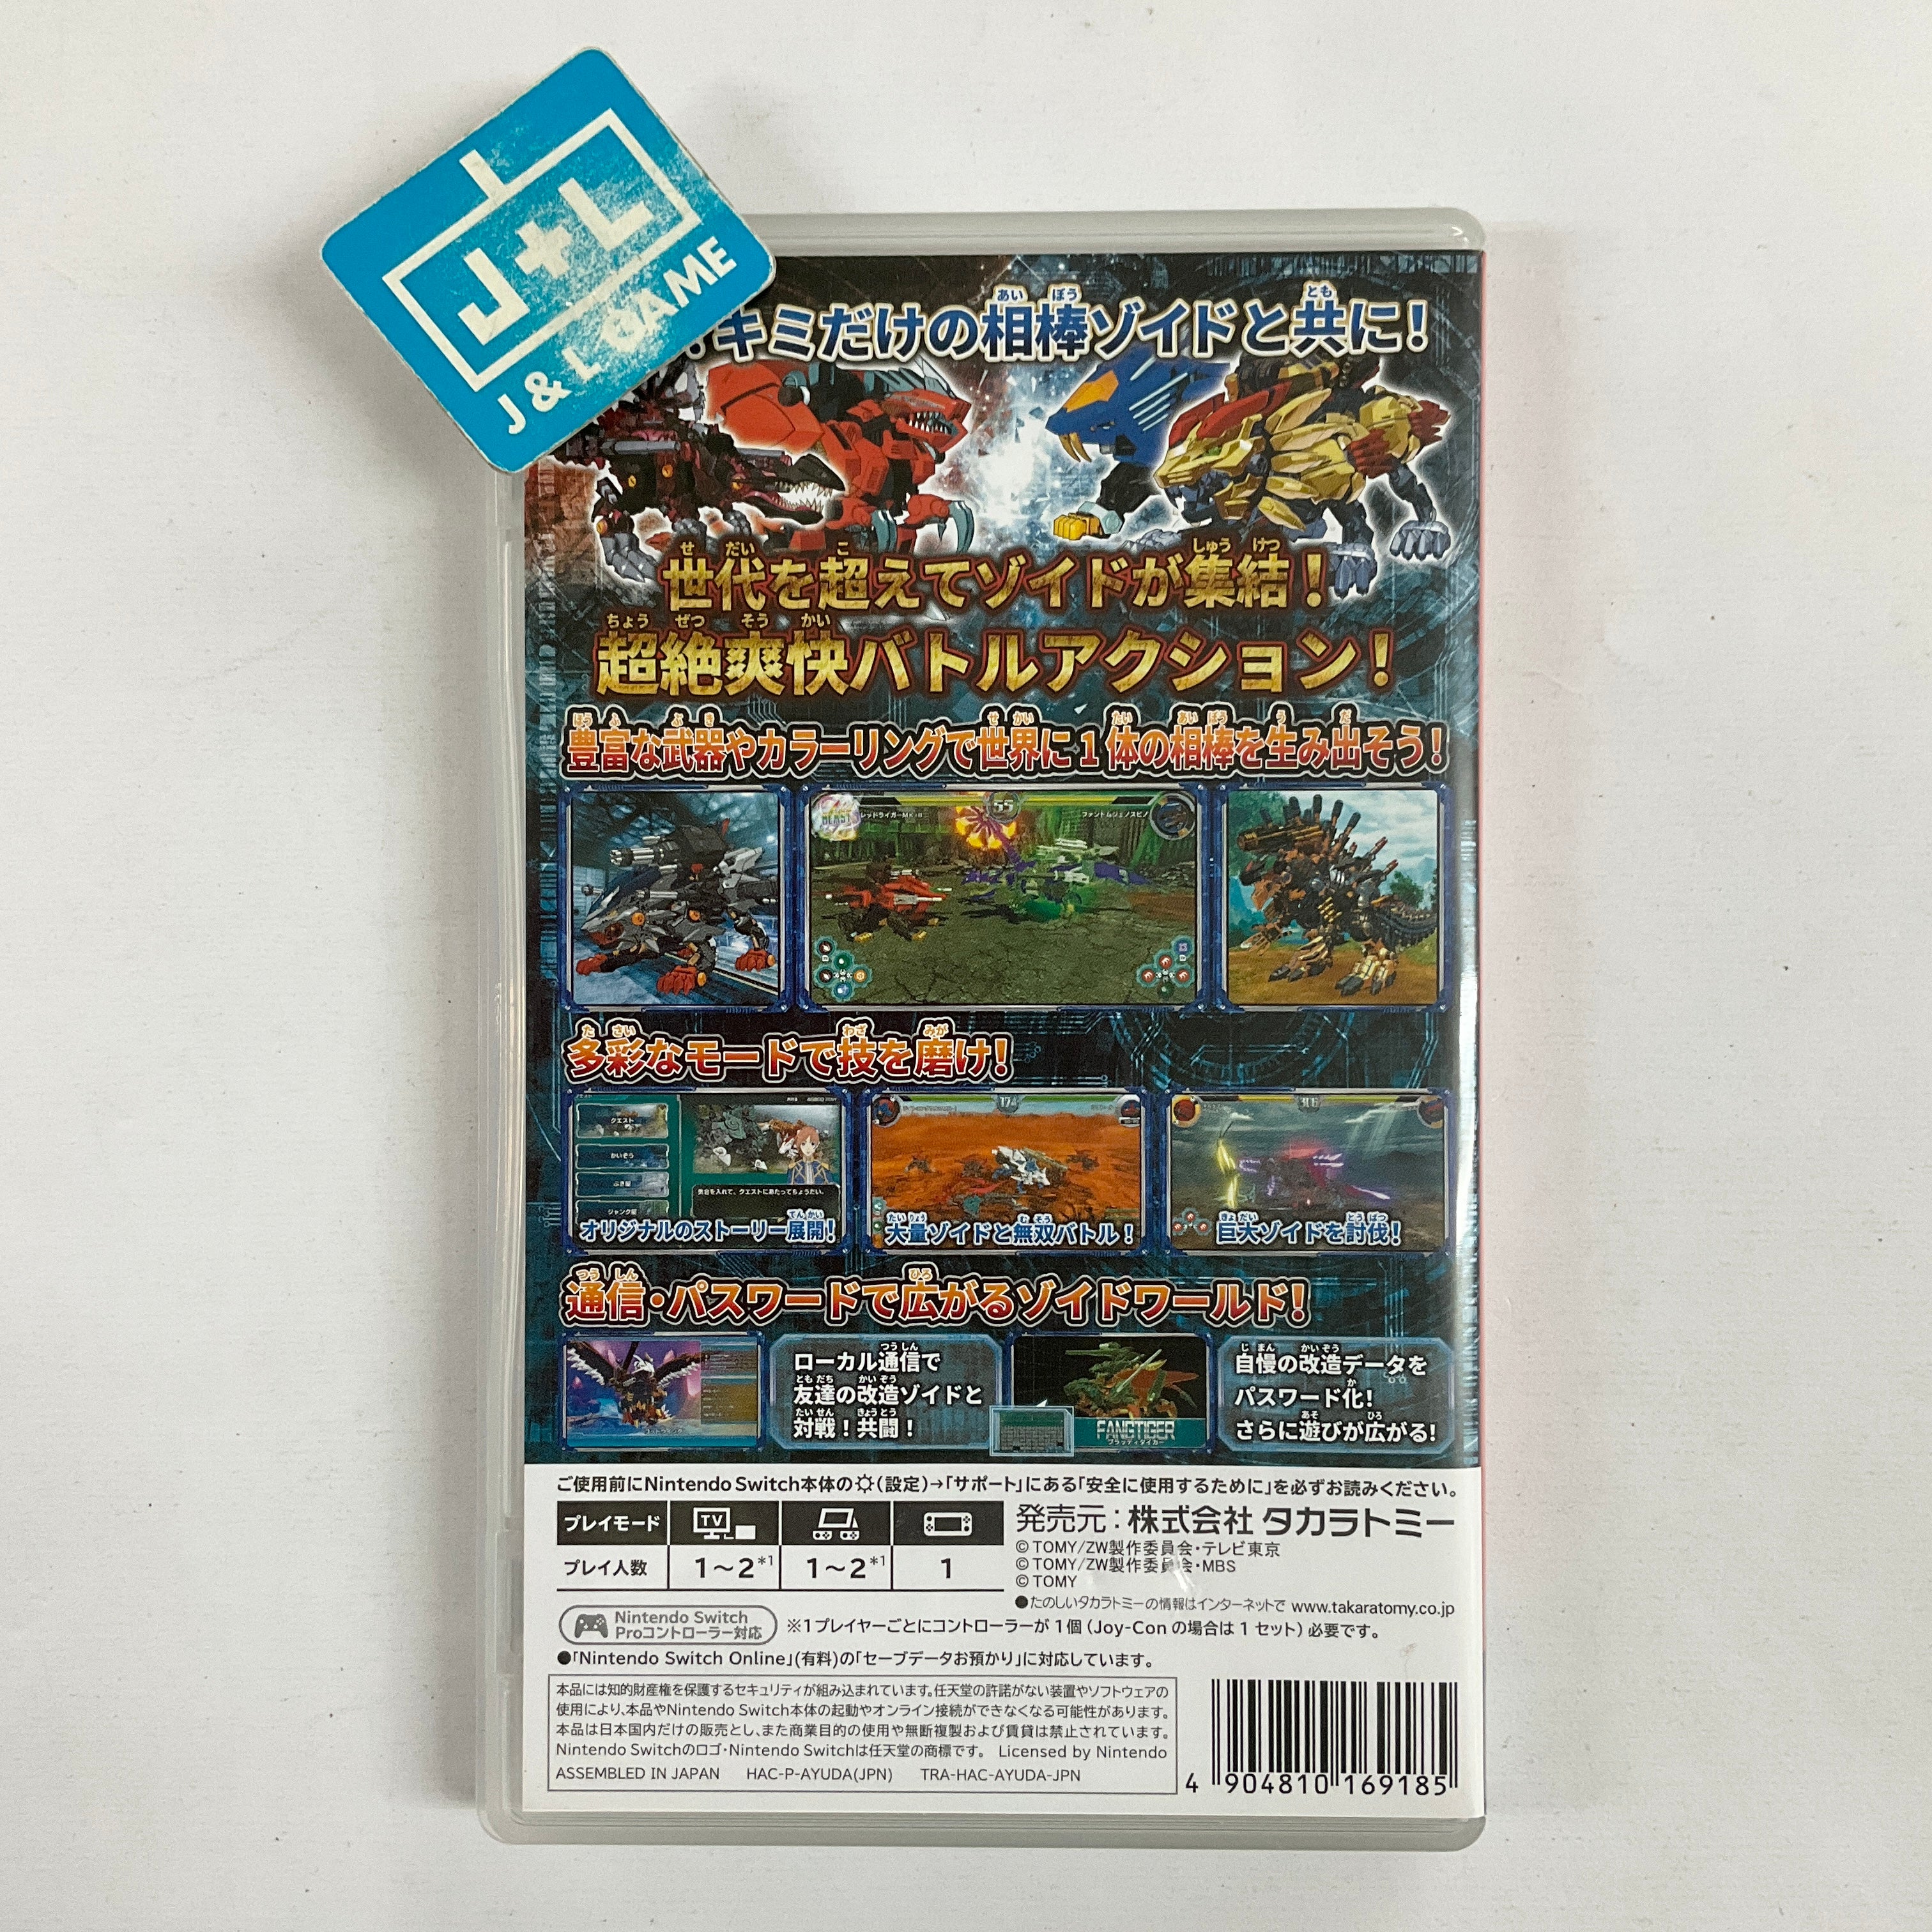 Zoids Wild: Infinity Blast - (NSW) Nintendo Switch [Pre-Owned] (Japanese Import) Video Games Takara Tomy   